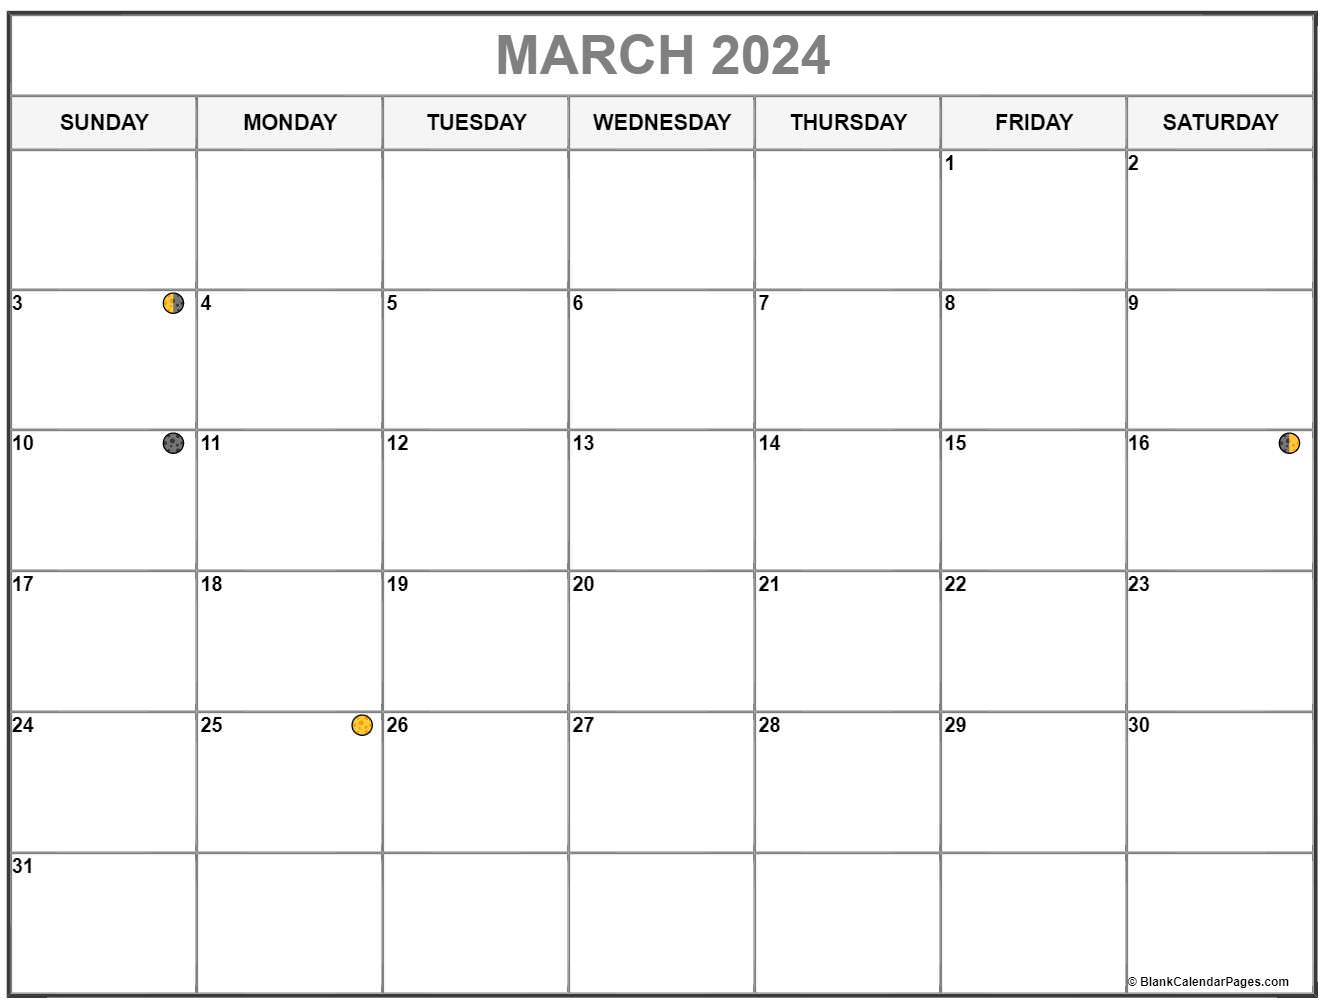 December 2023 Moon Phases Printable Template Calendar